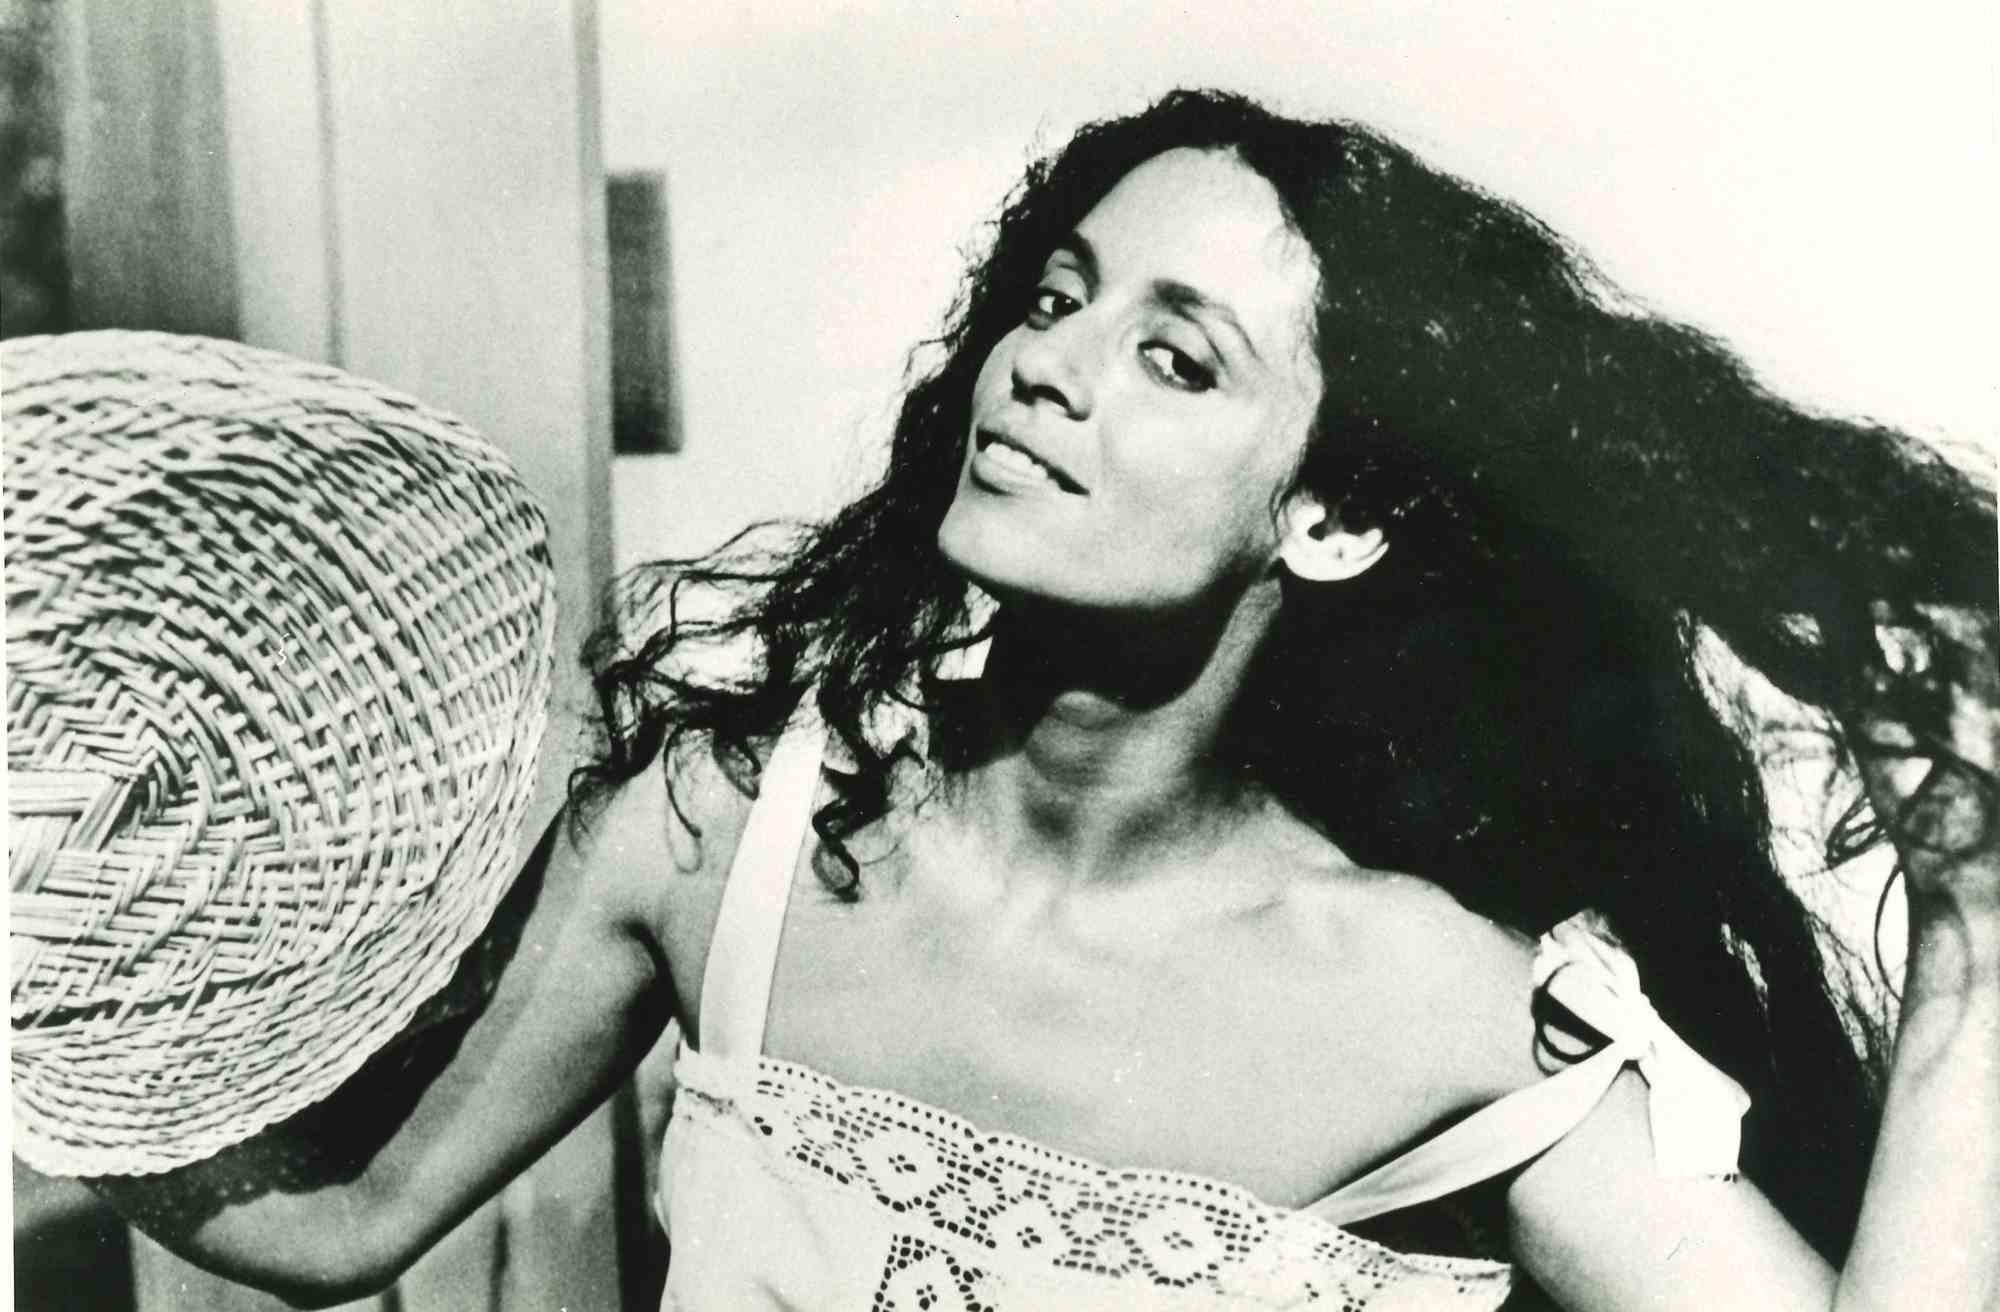 Sonia Braga - 1970s